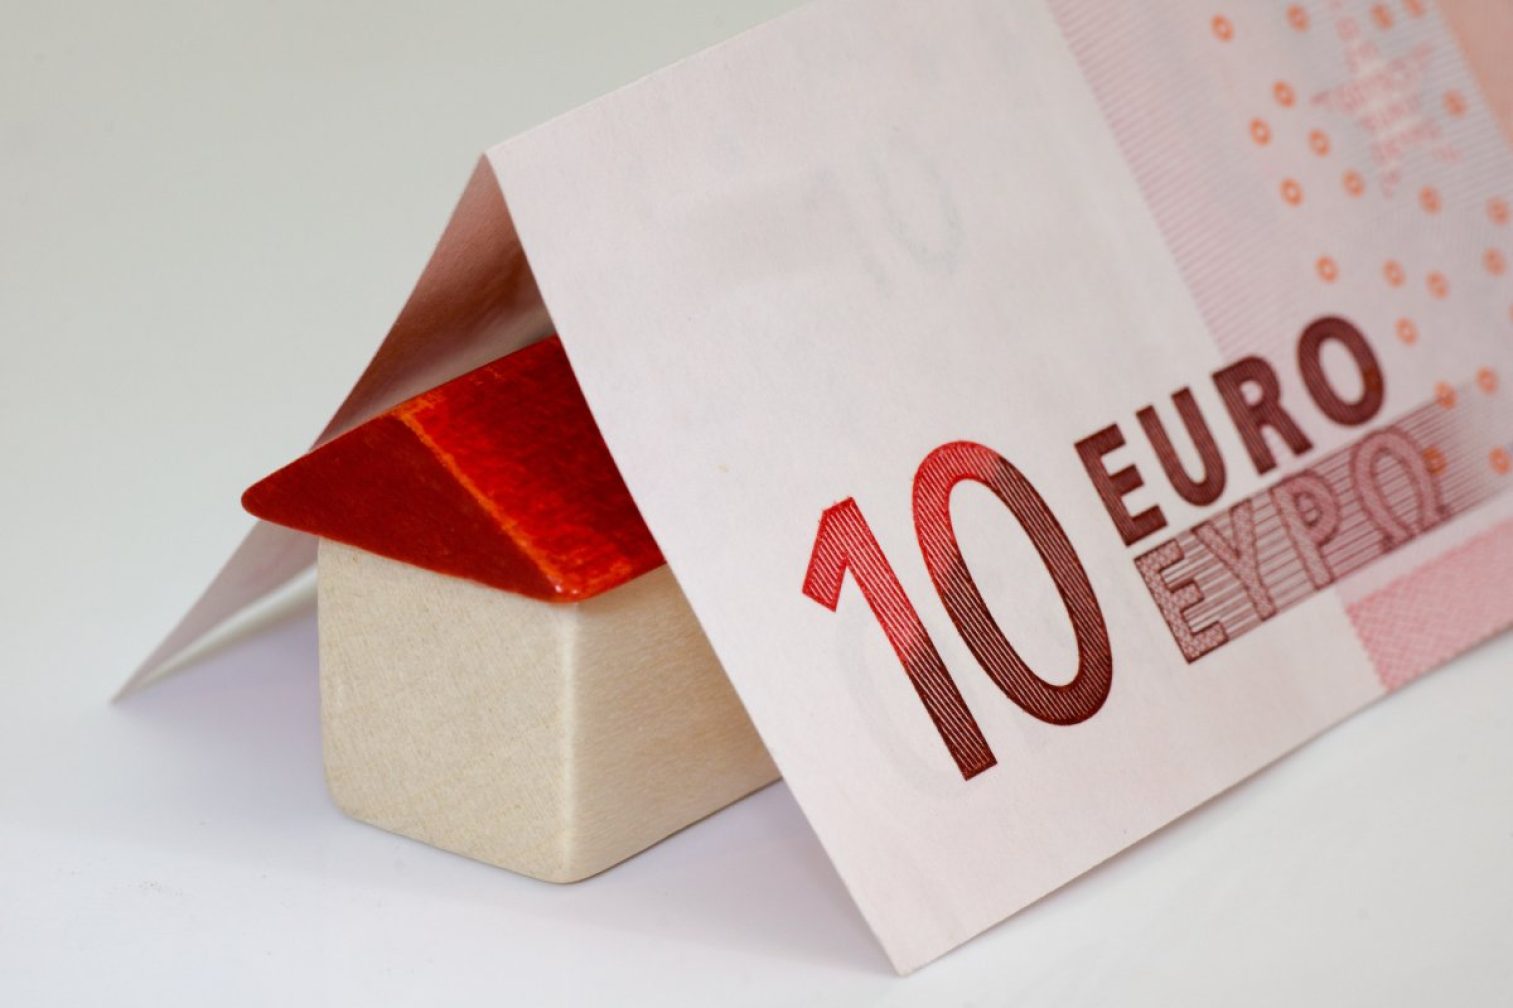 money, euro, bank note